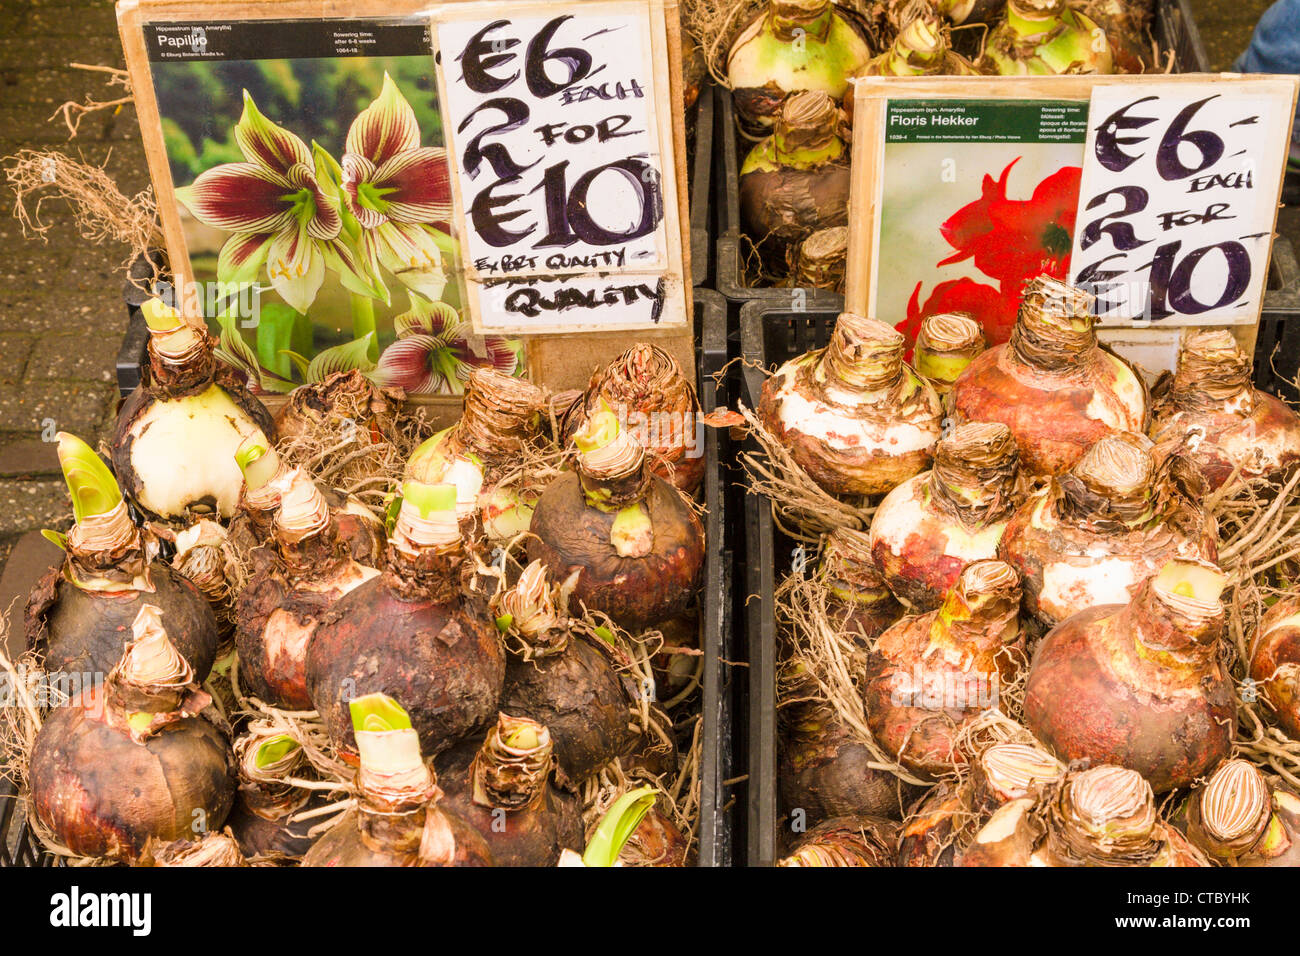 Amaryllis bulbs for sale at Flower market Stock Photo - Alamy